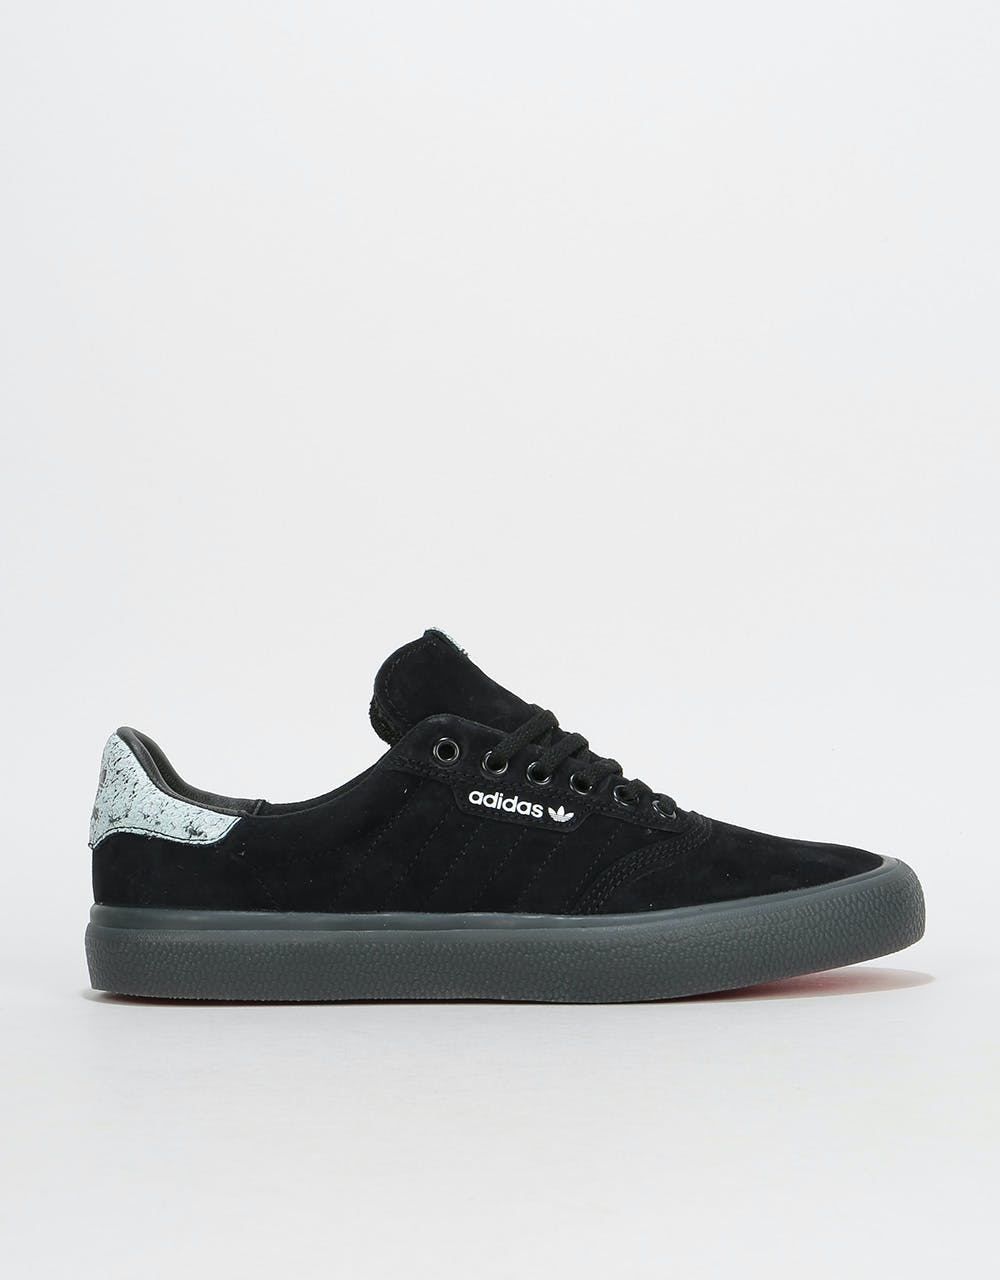 adidas 3mc skate shoes